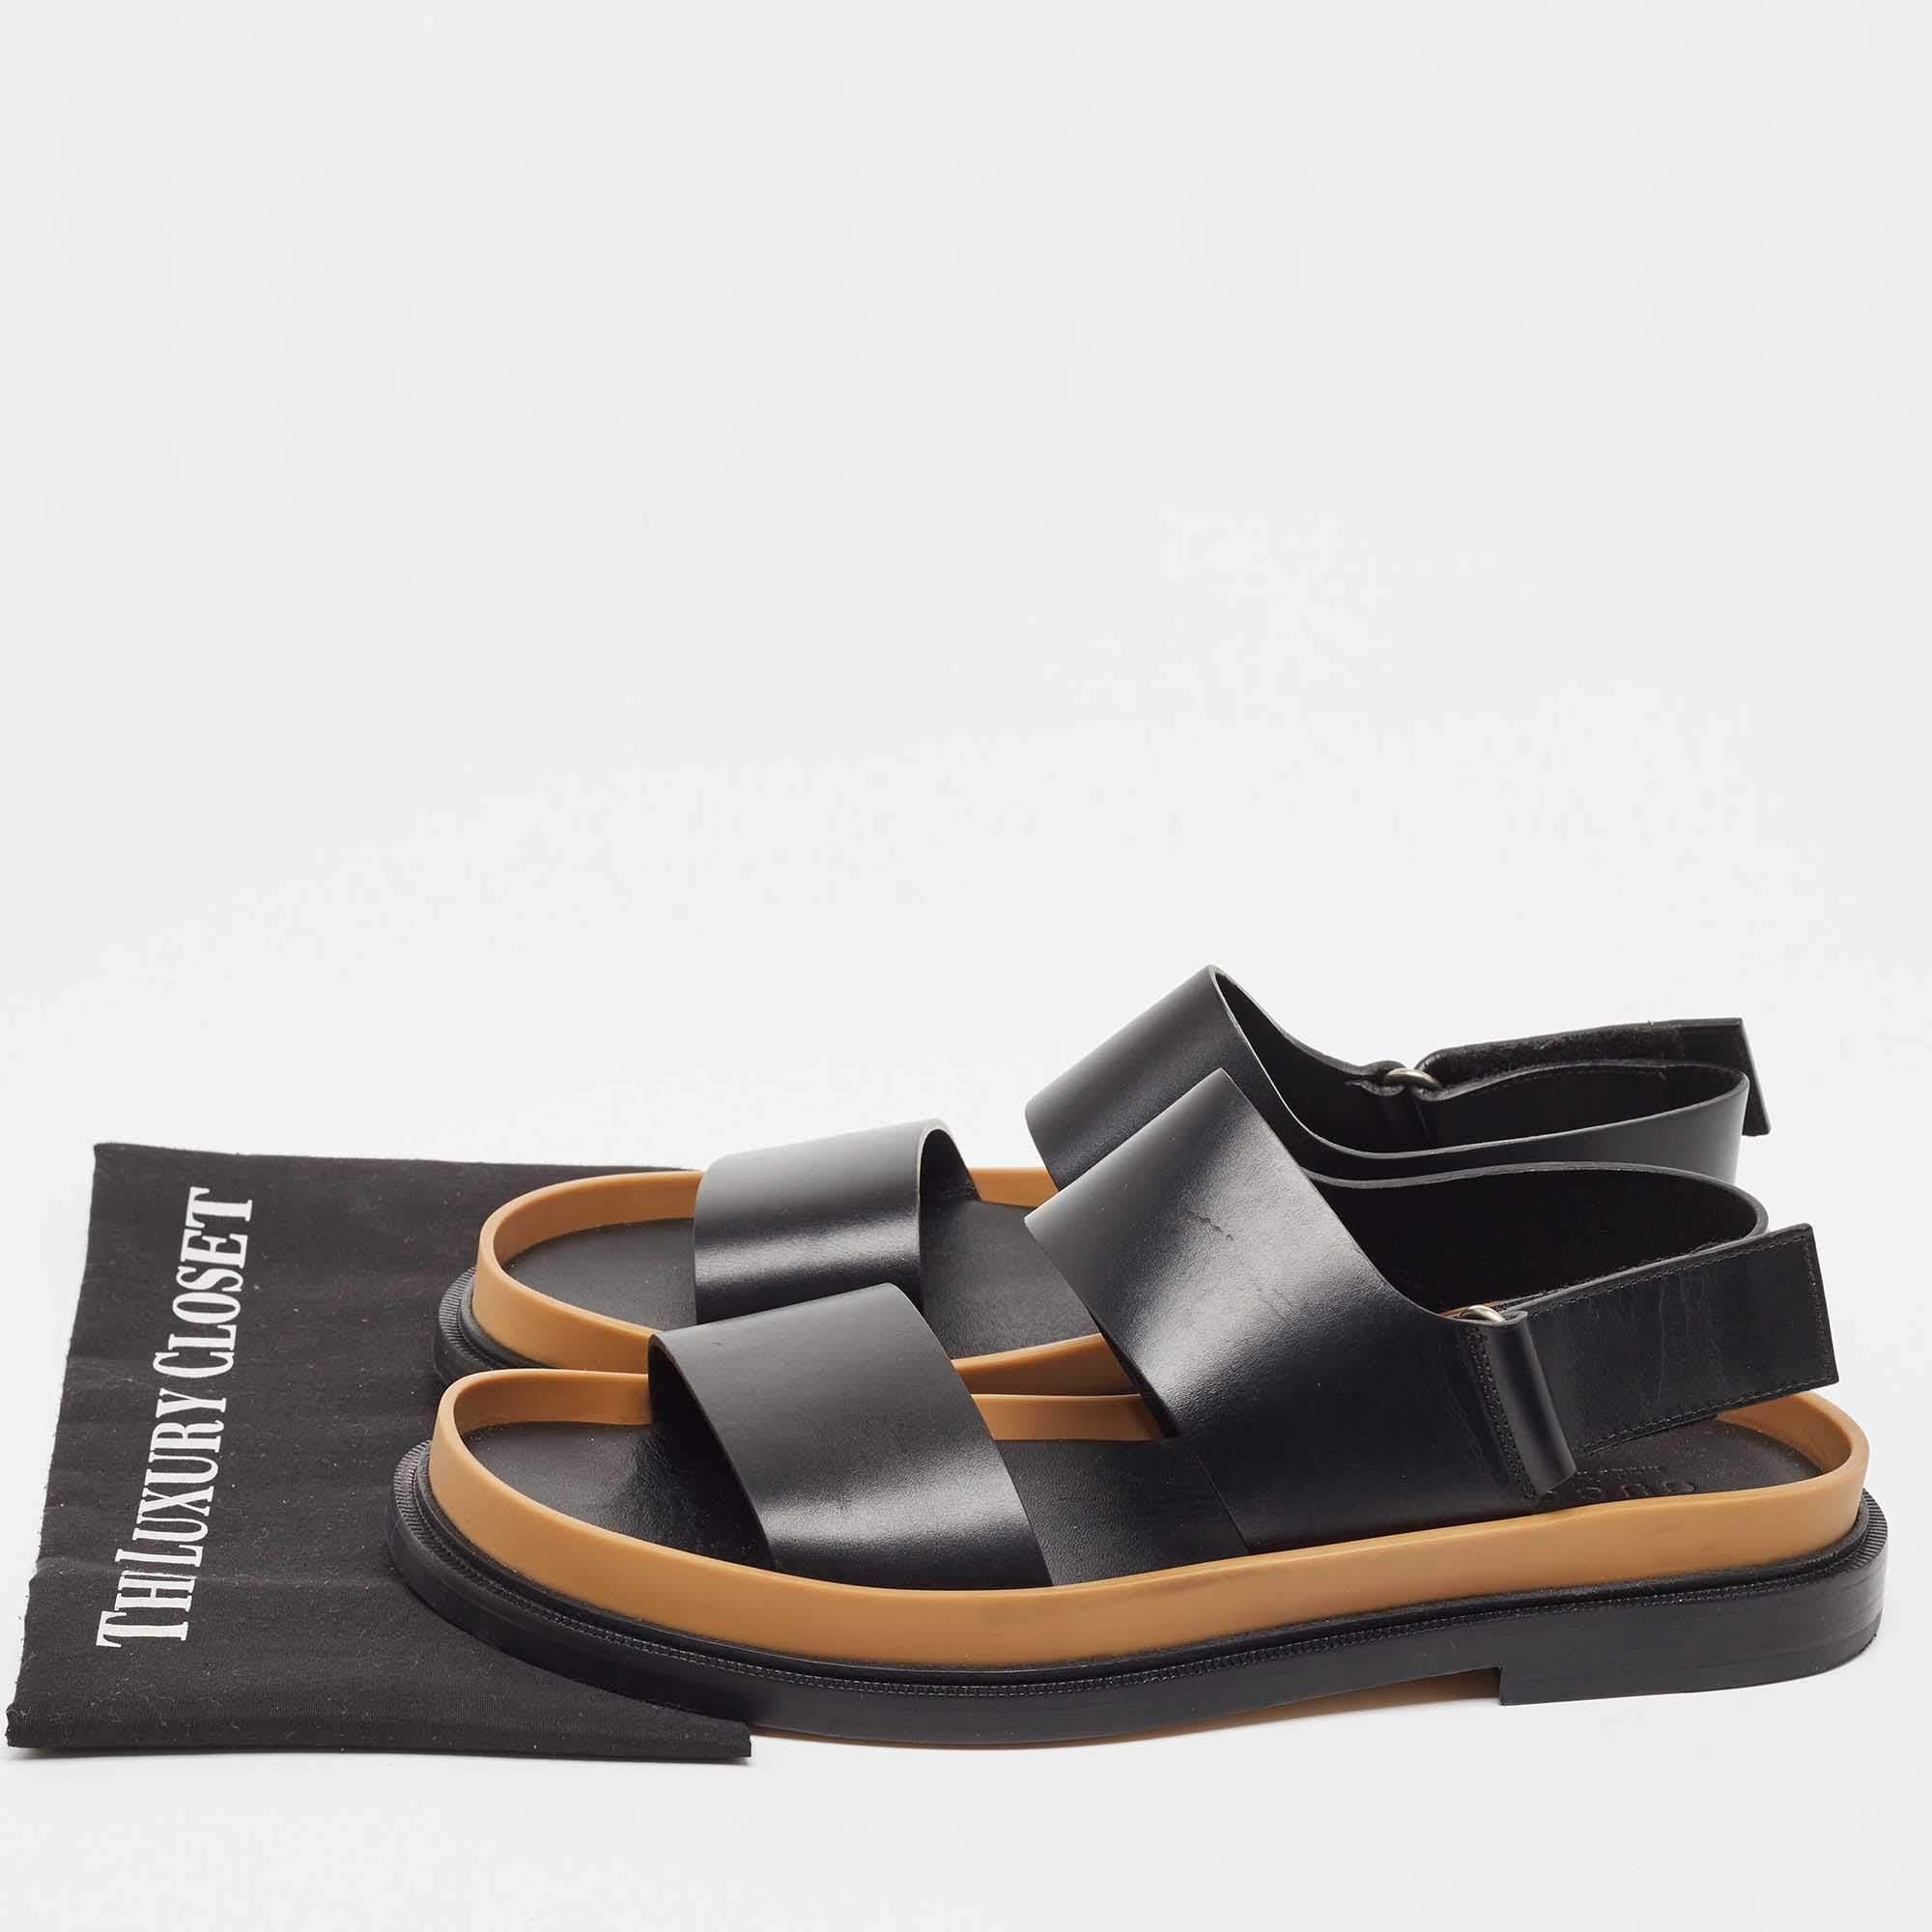 Gucci Black Leather Slingback Flat Sandals Size 44 5